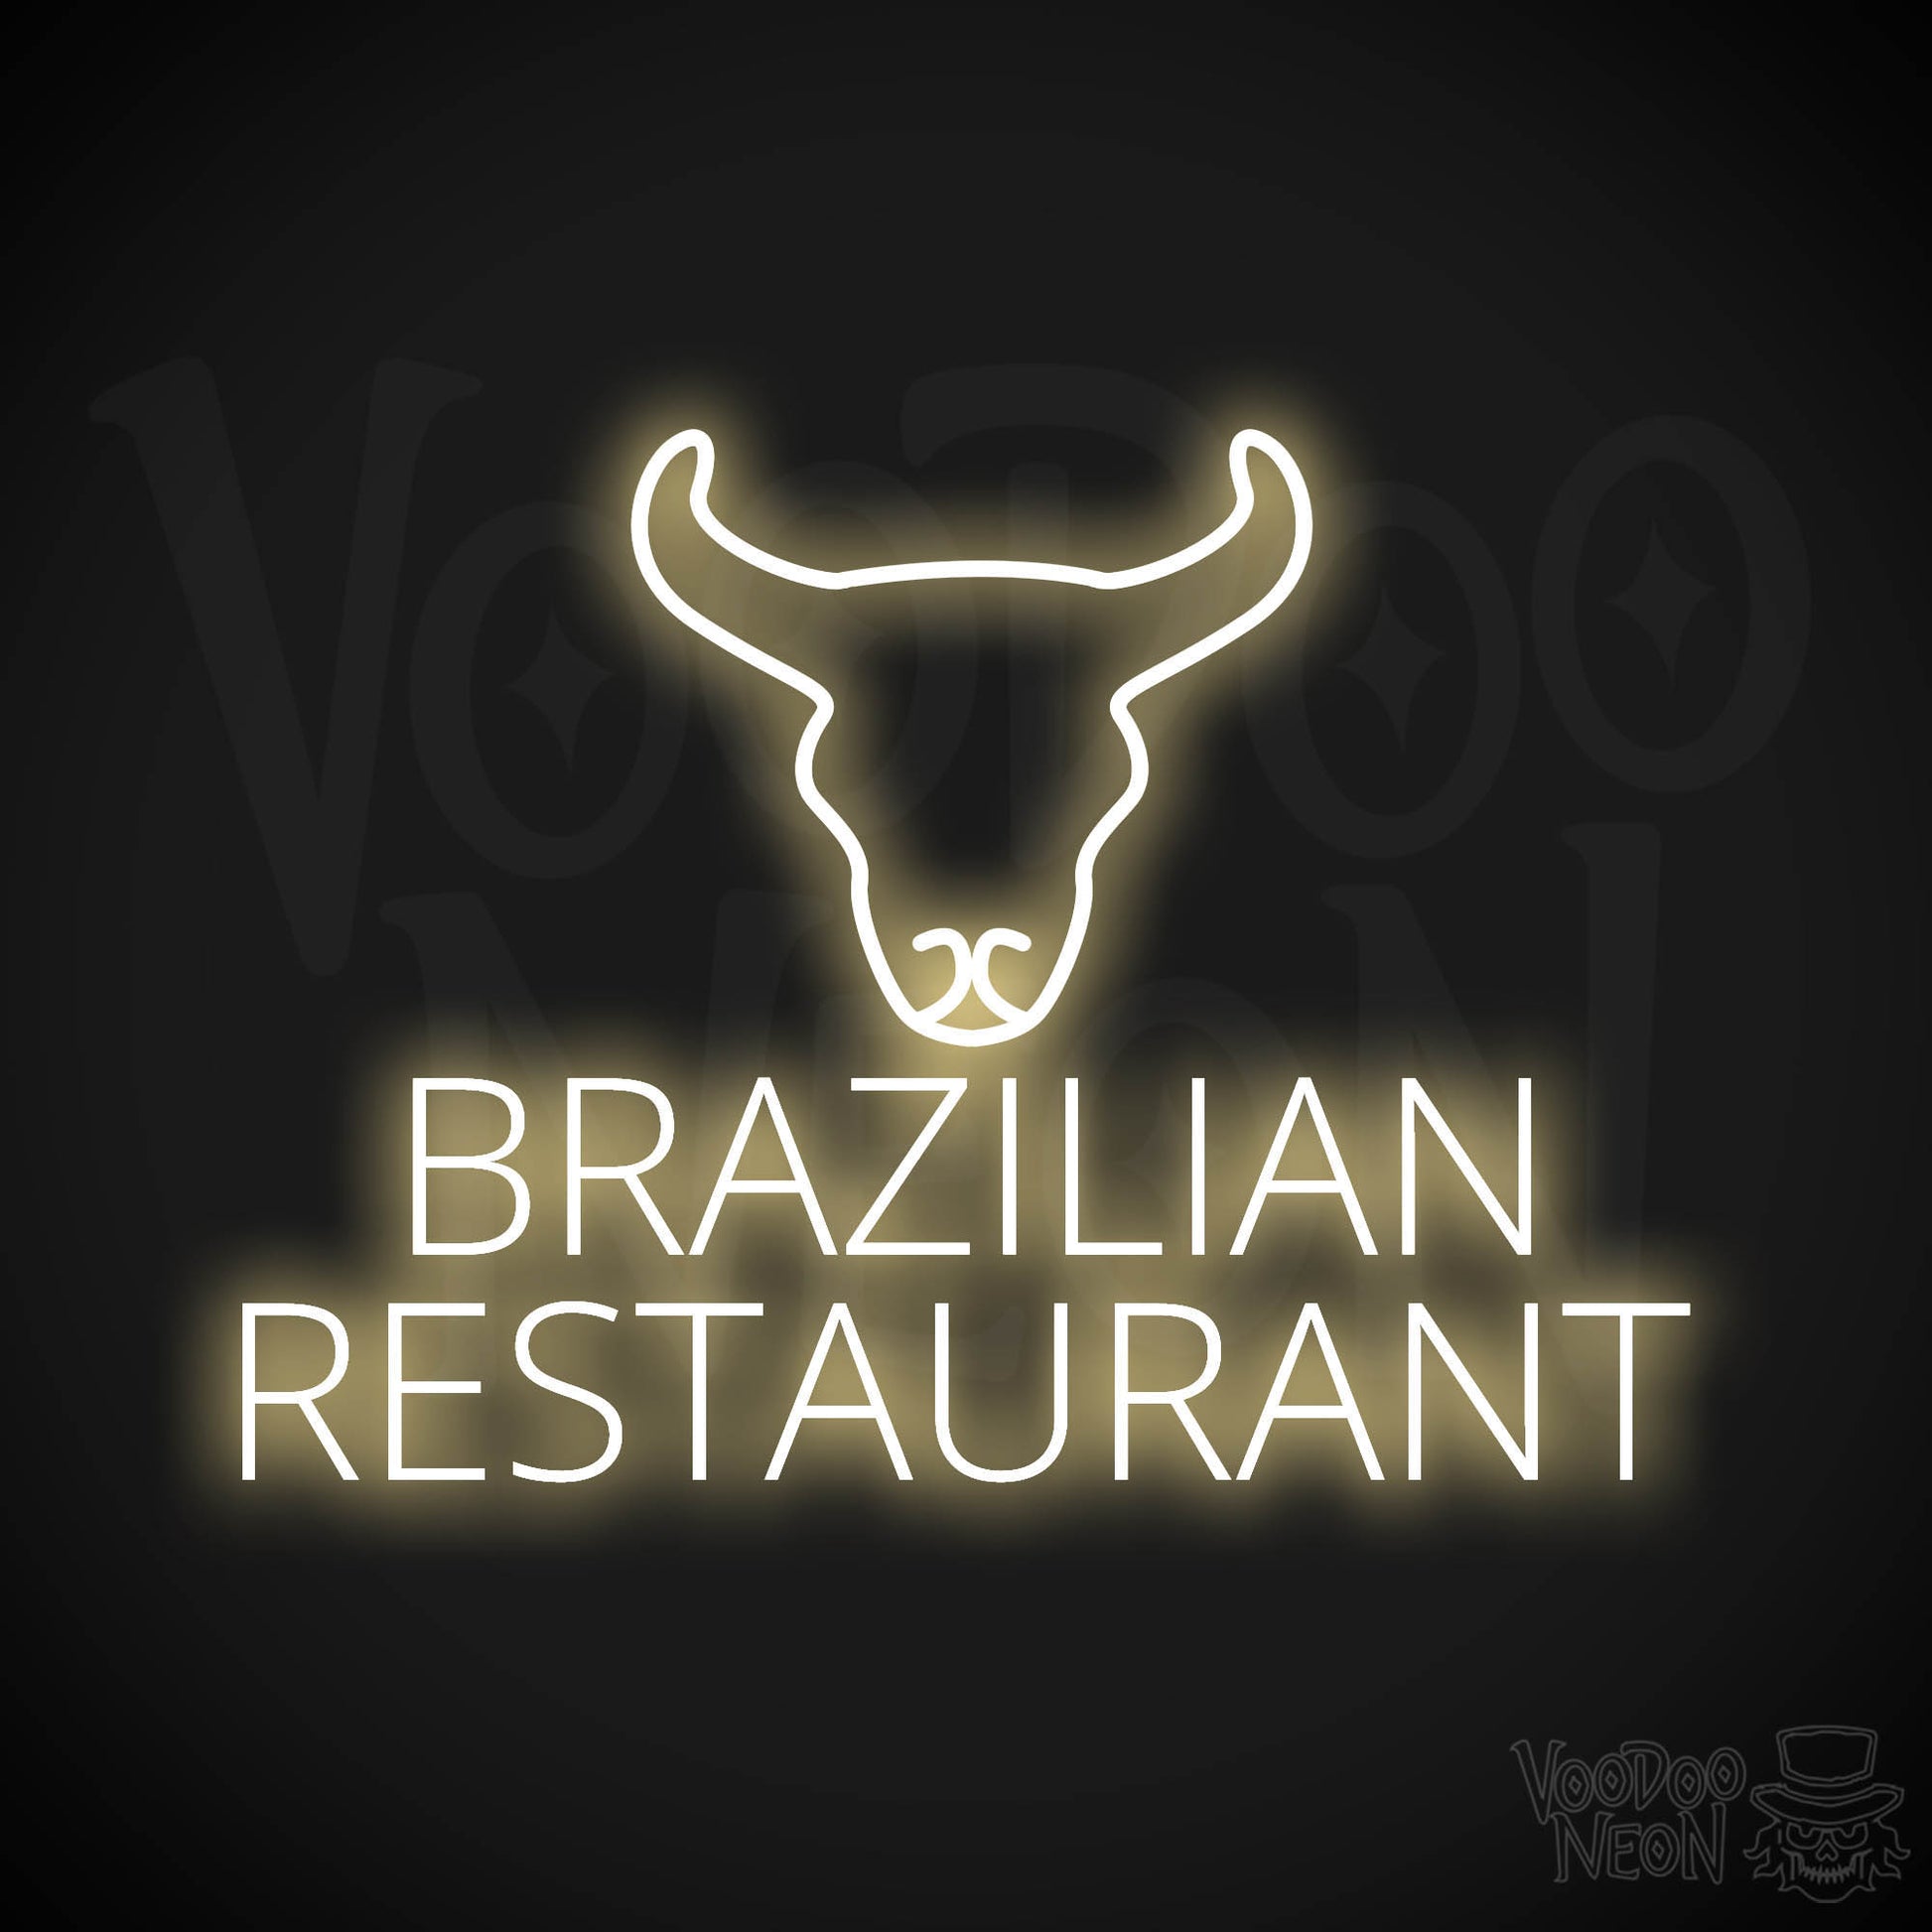 Brazilian Restaurant LED Neon - Warm White